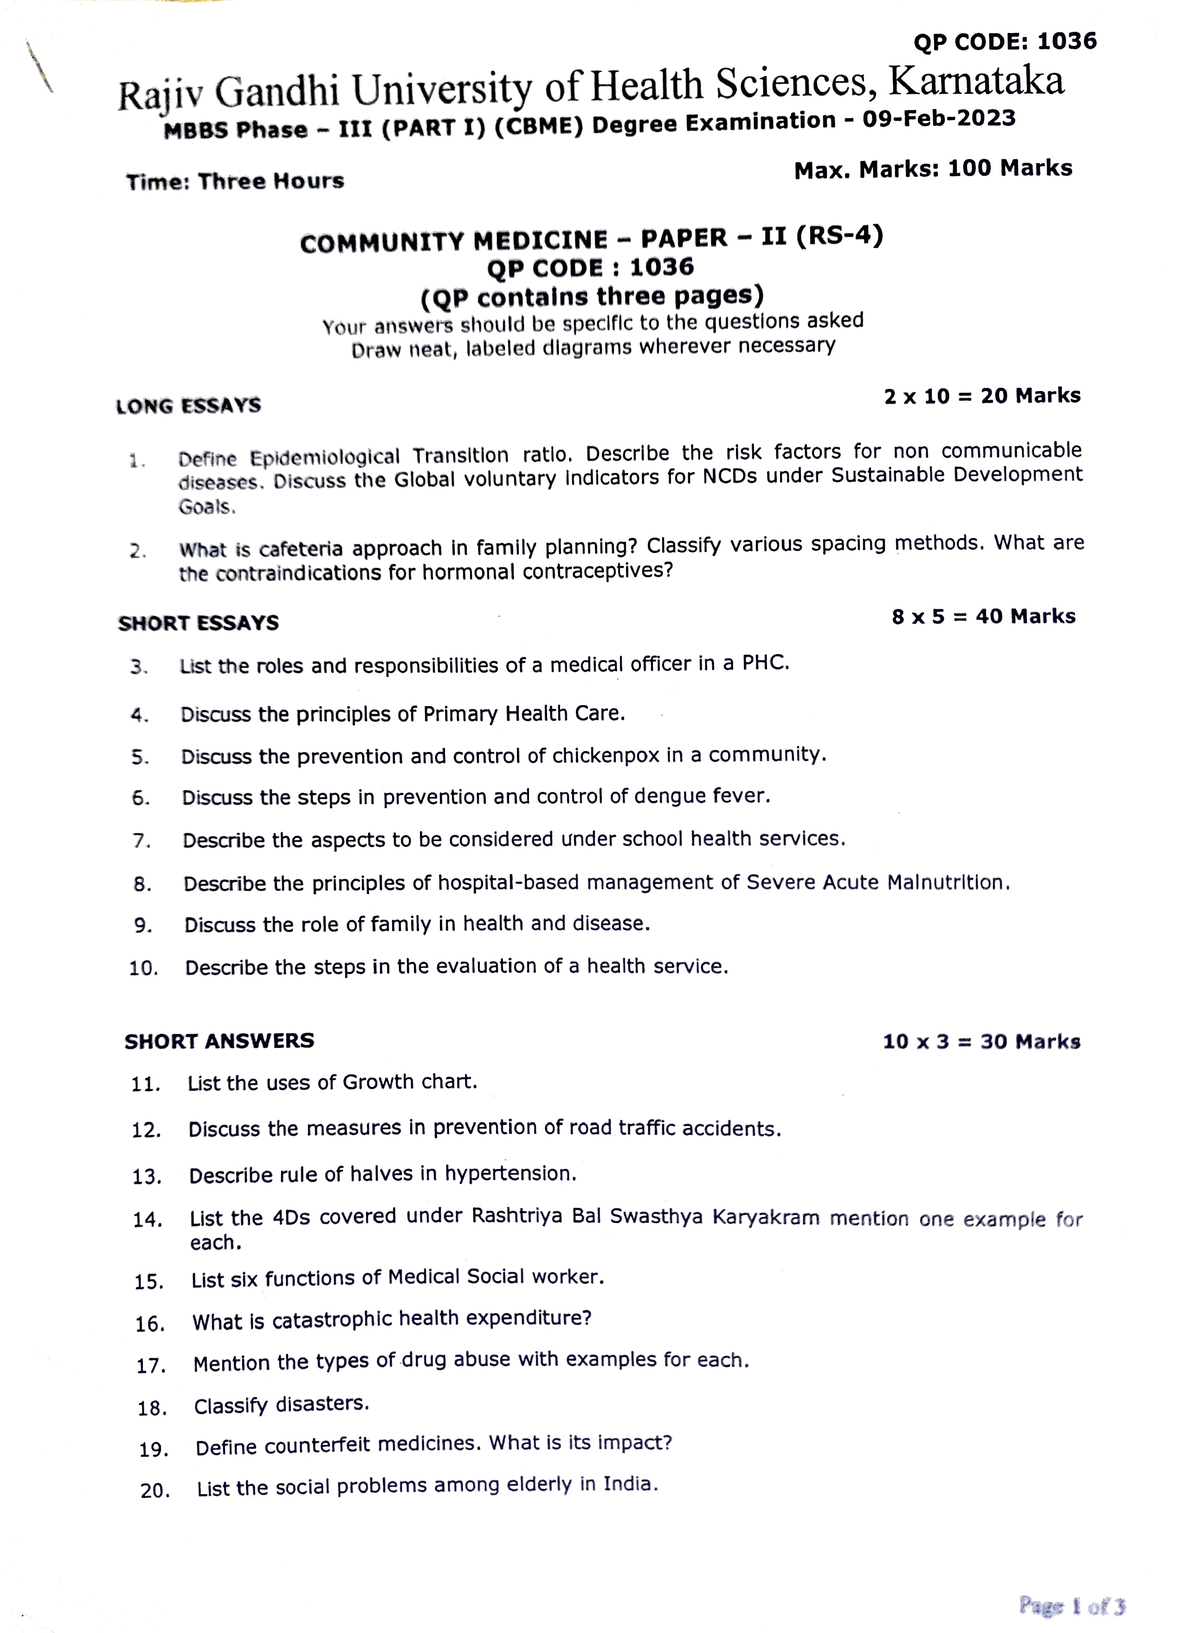 research topics in community medicine in india